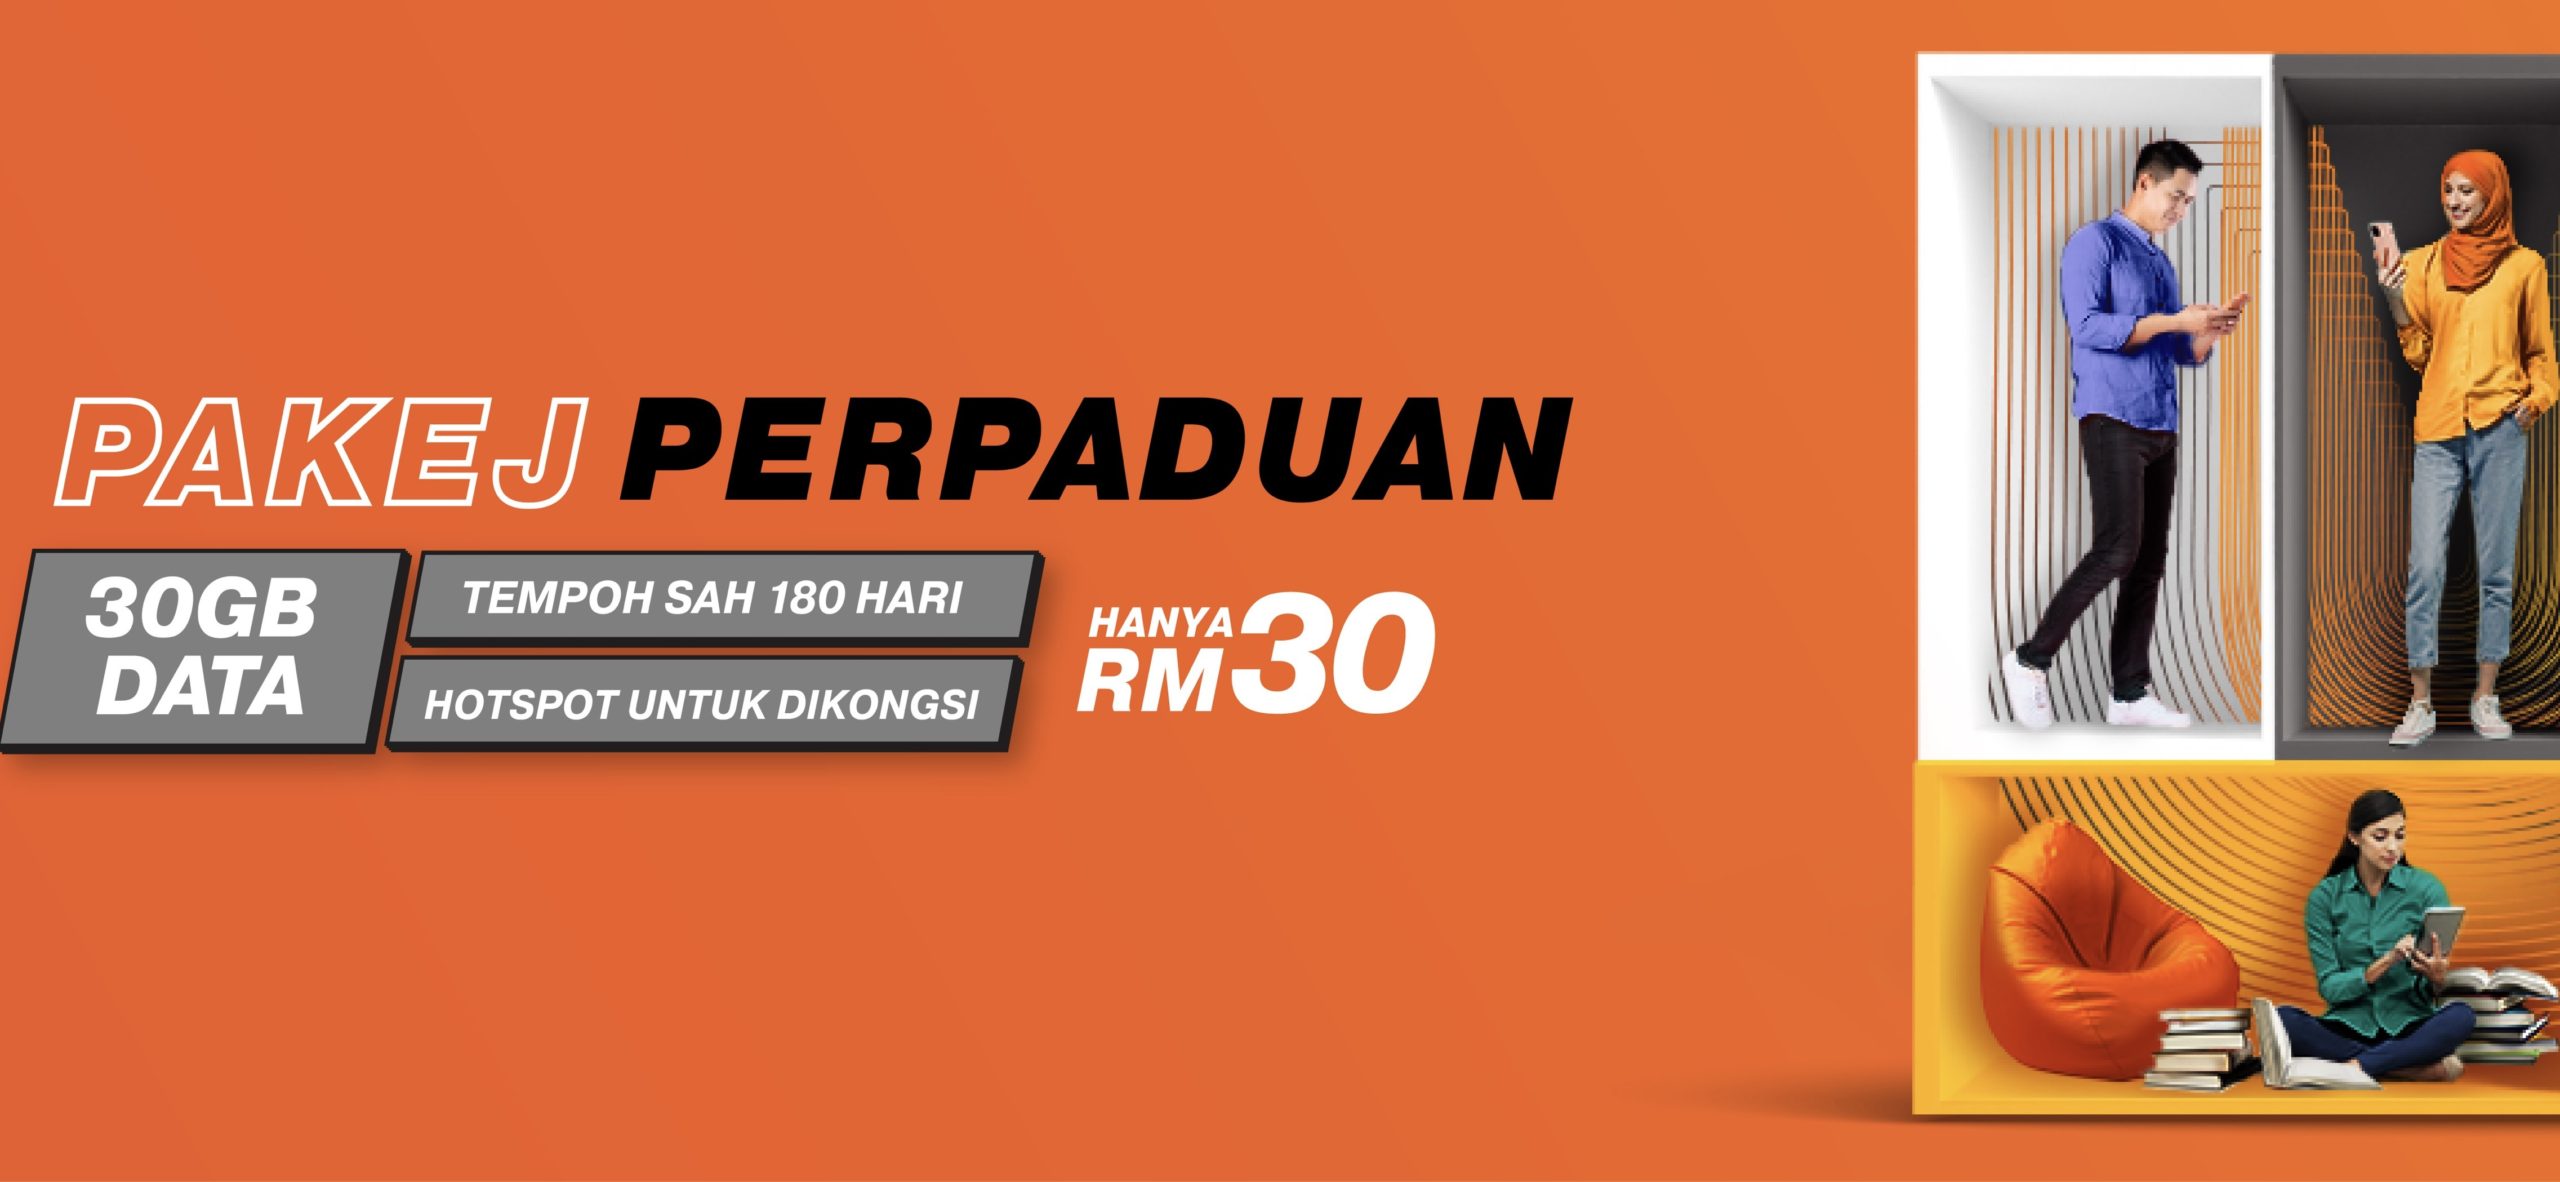 Pakej Perpaduan Prabayar U Mobile kini ditawarkan pada harga RM 30 sebulan 3